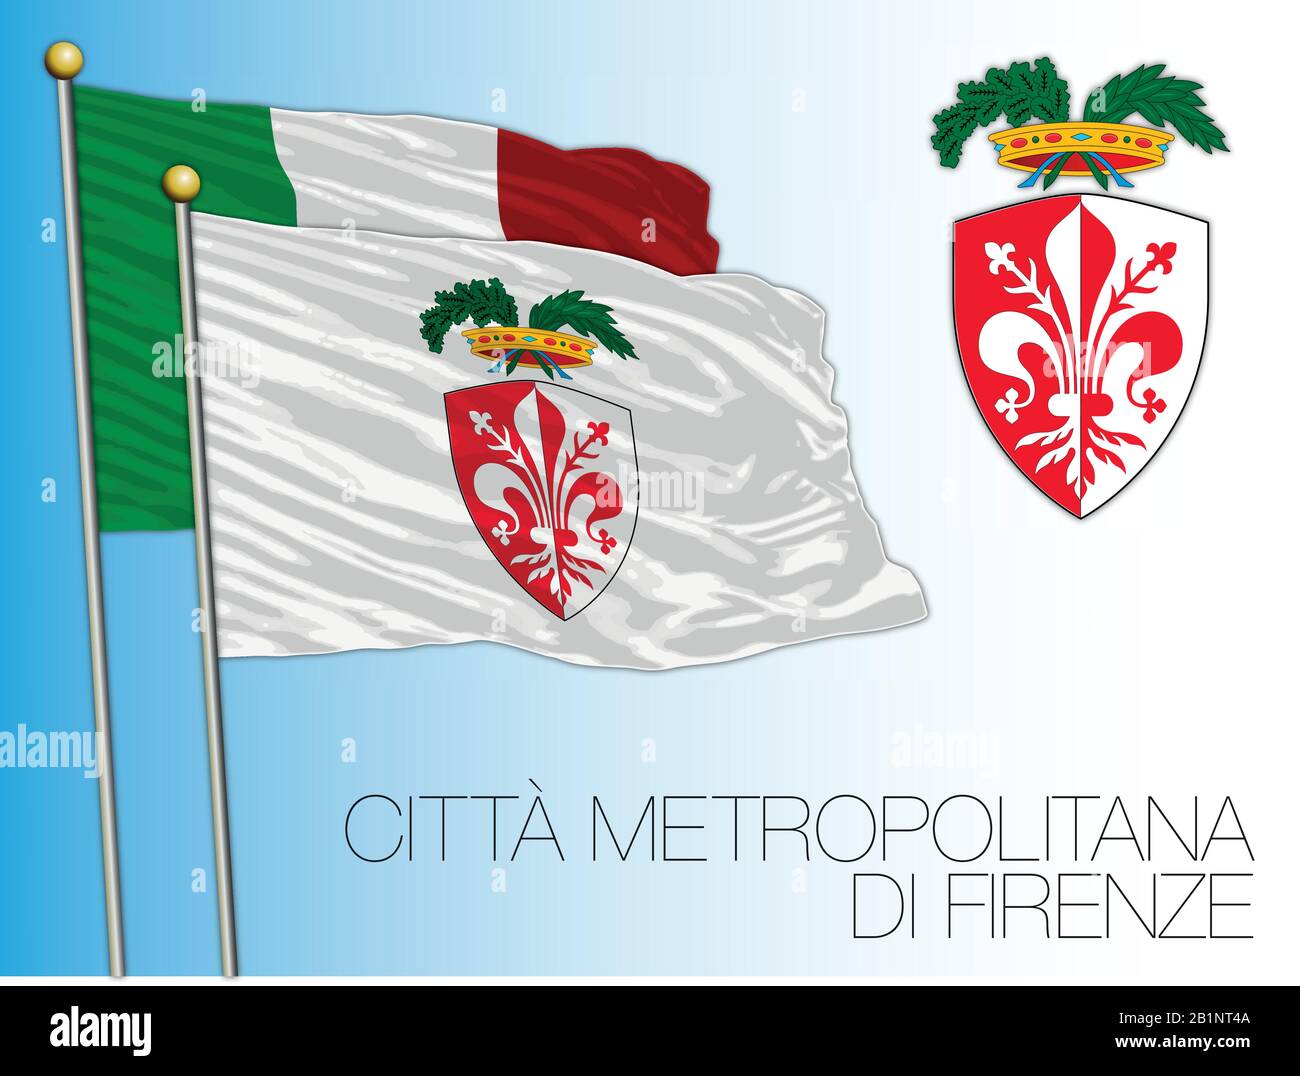 Citta Metropolitana di Firenze, Metropolitan City of Florence, flag and coat of arms, Tuscany region, Italy, vector illustration Stock Vector